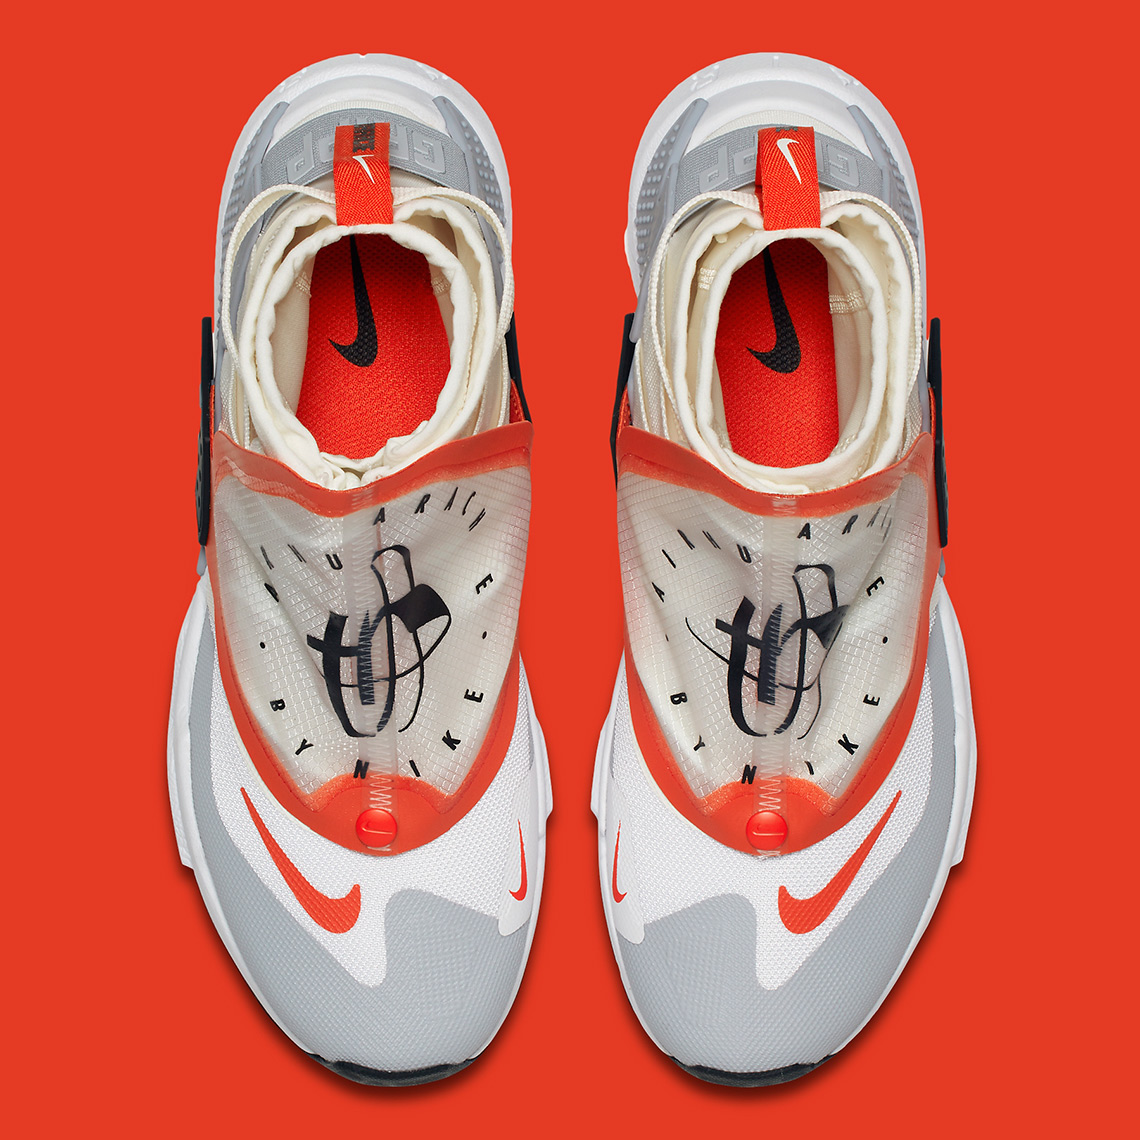 Nike Air Huarache Gripp At0298 100 At0298 001 Sneakernews Com